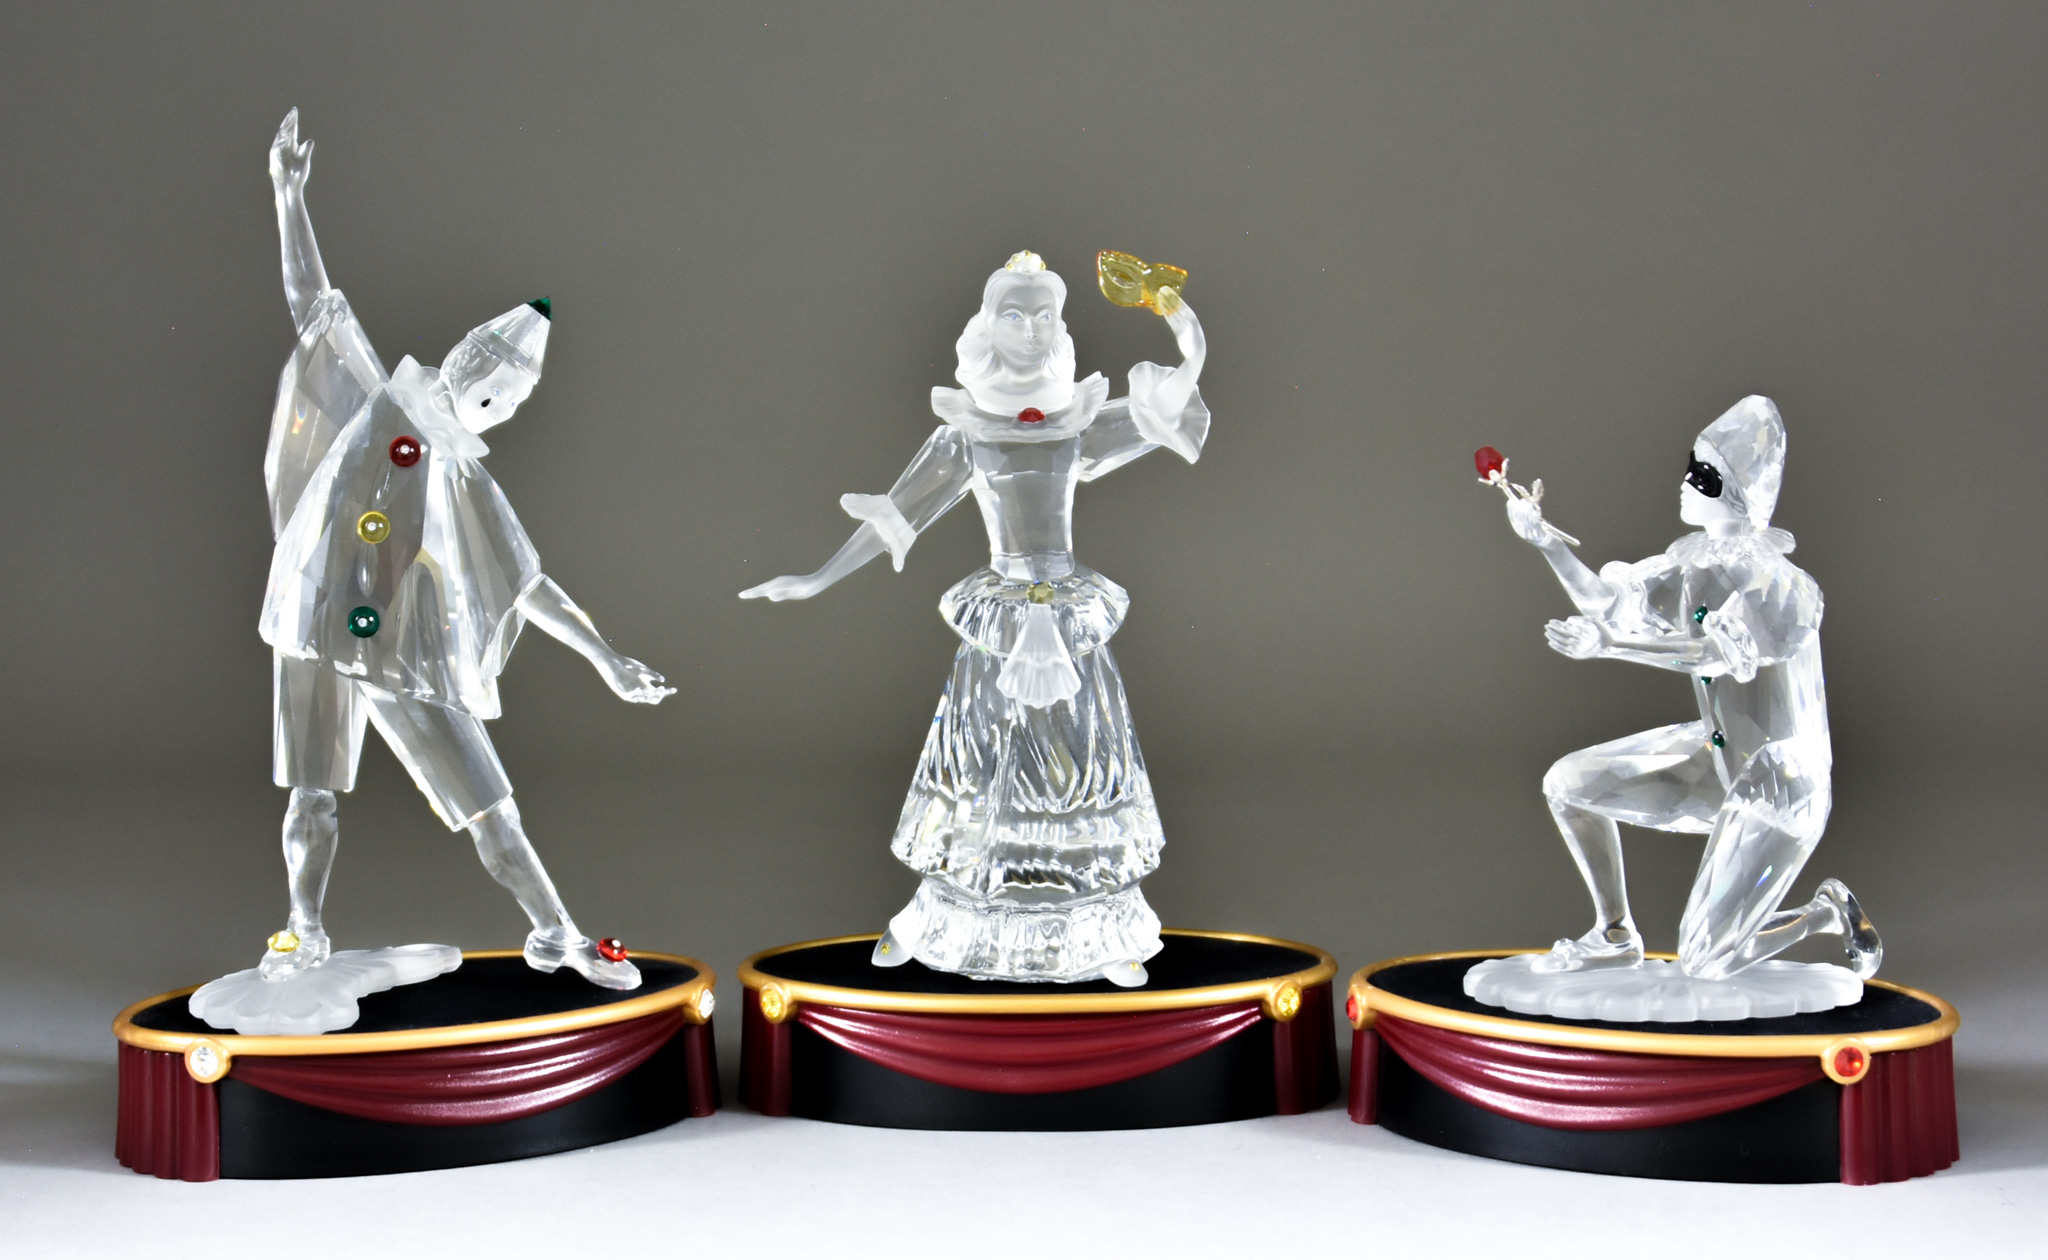 Three Swarovski Crystal Annual Editions Figures - "Pierrot", "Harlequin", and "Columbine", all